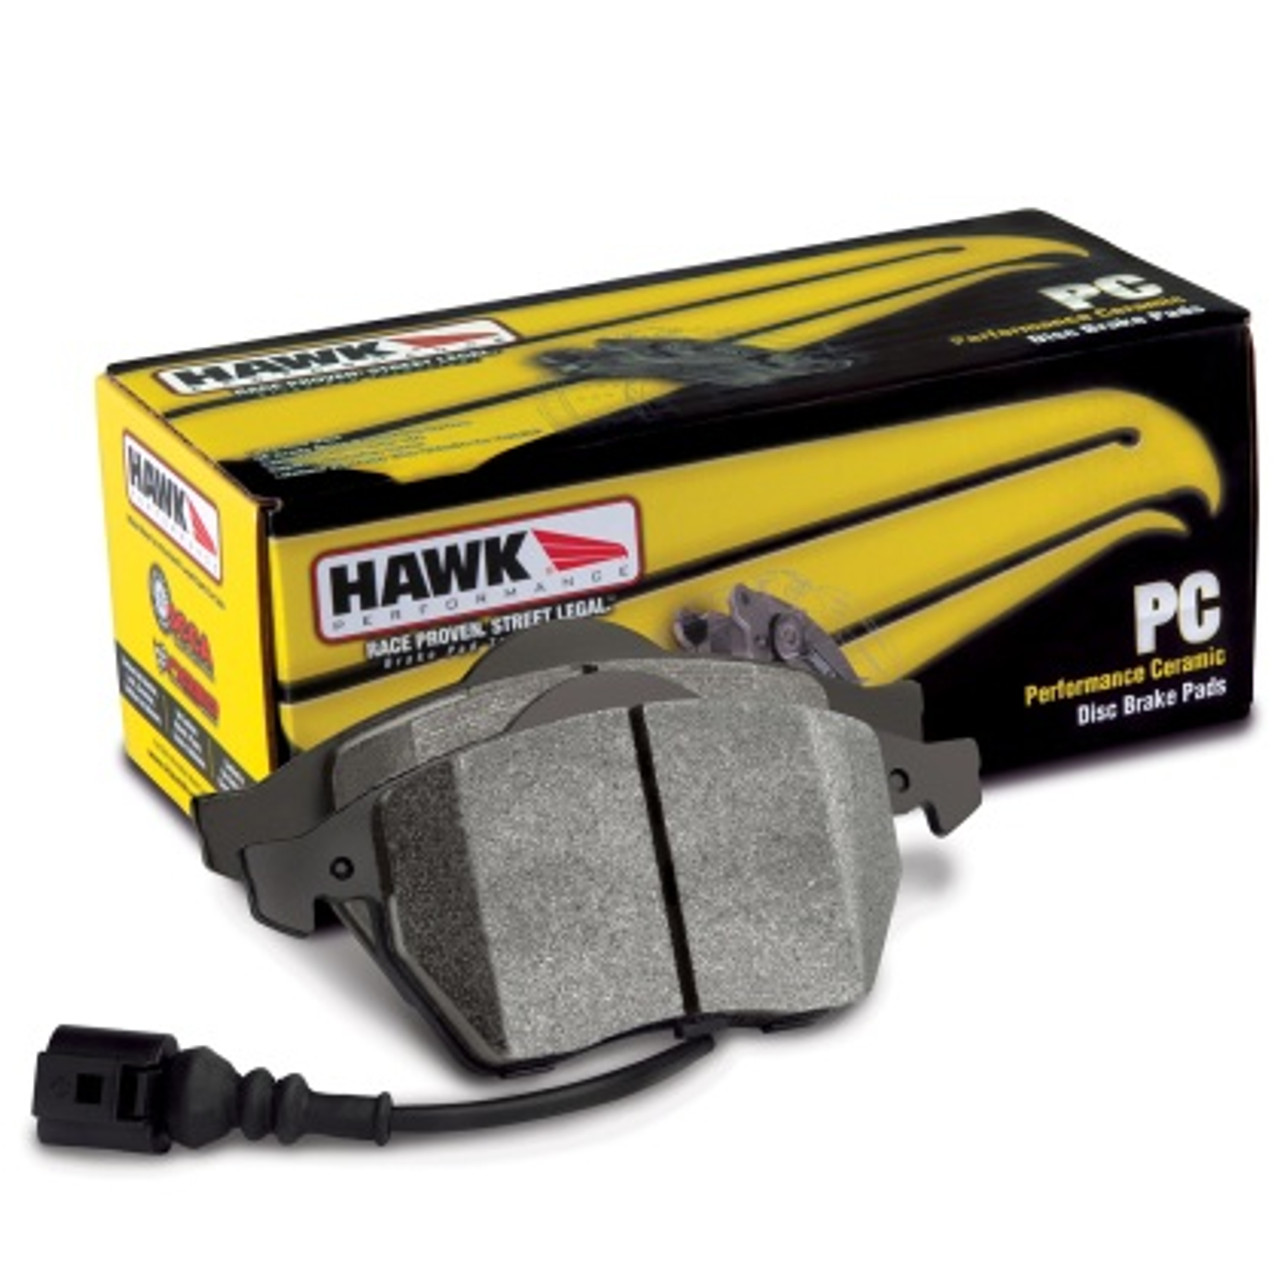 Hawk Performance Ceramic Front Brake Pads for C7 RS7